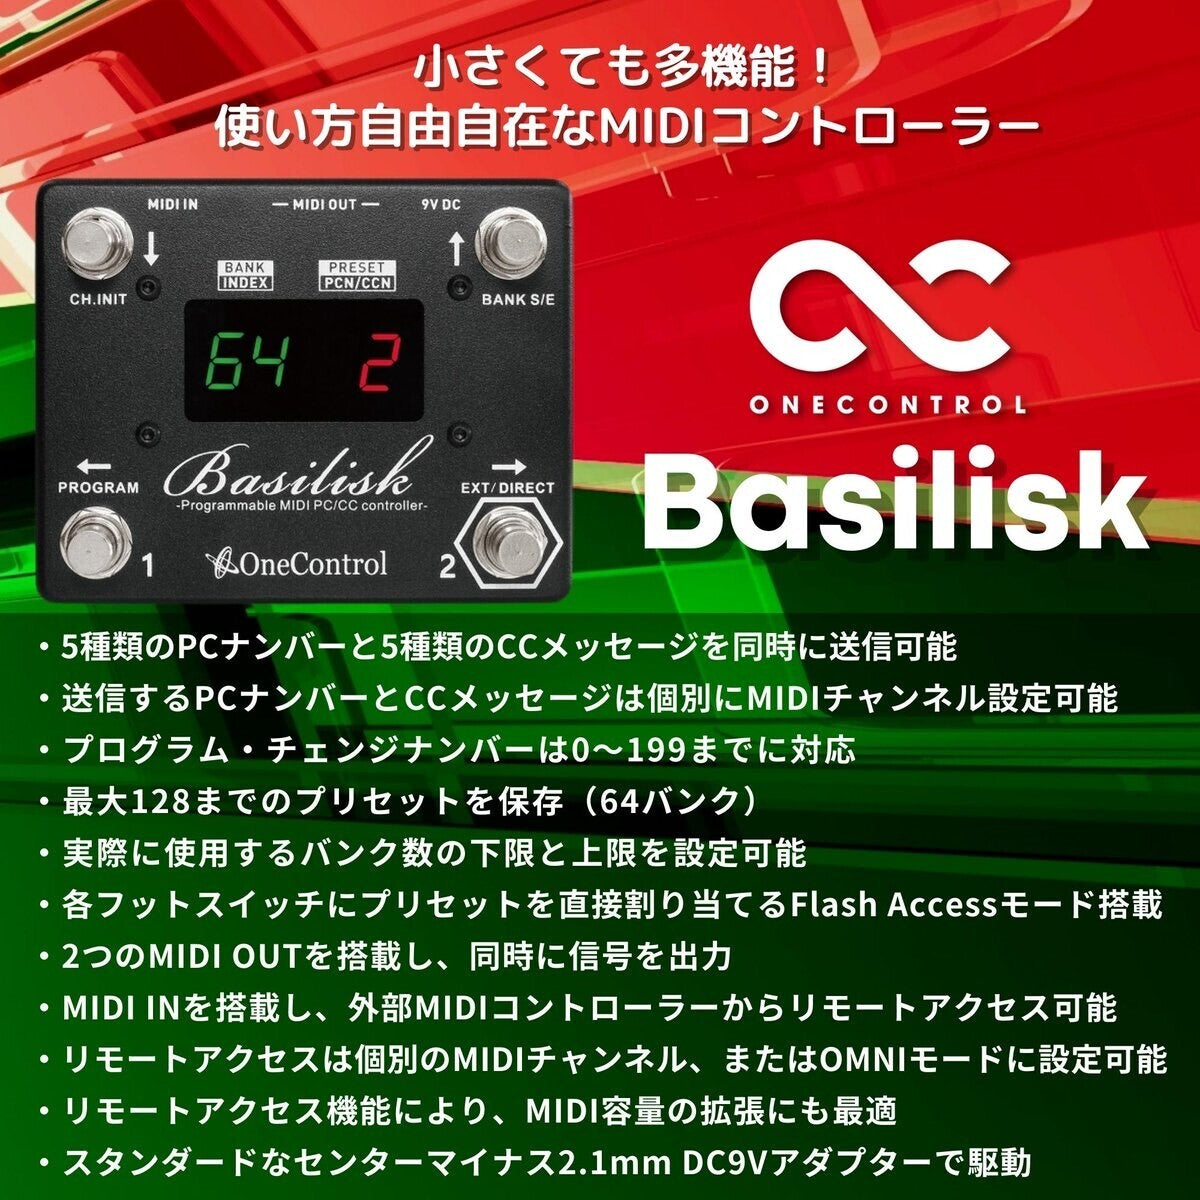 One Control Basilisk